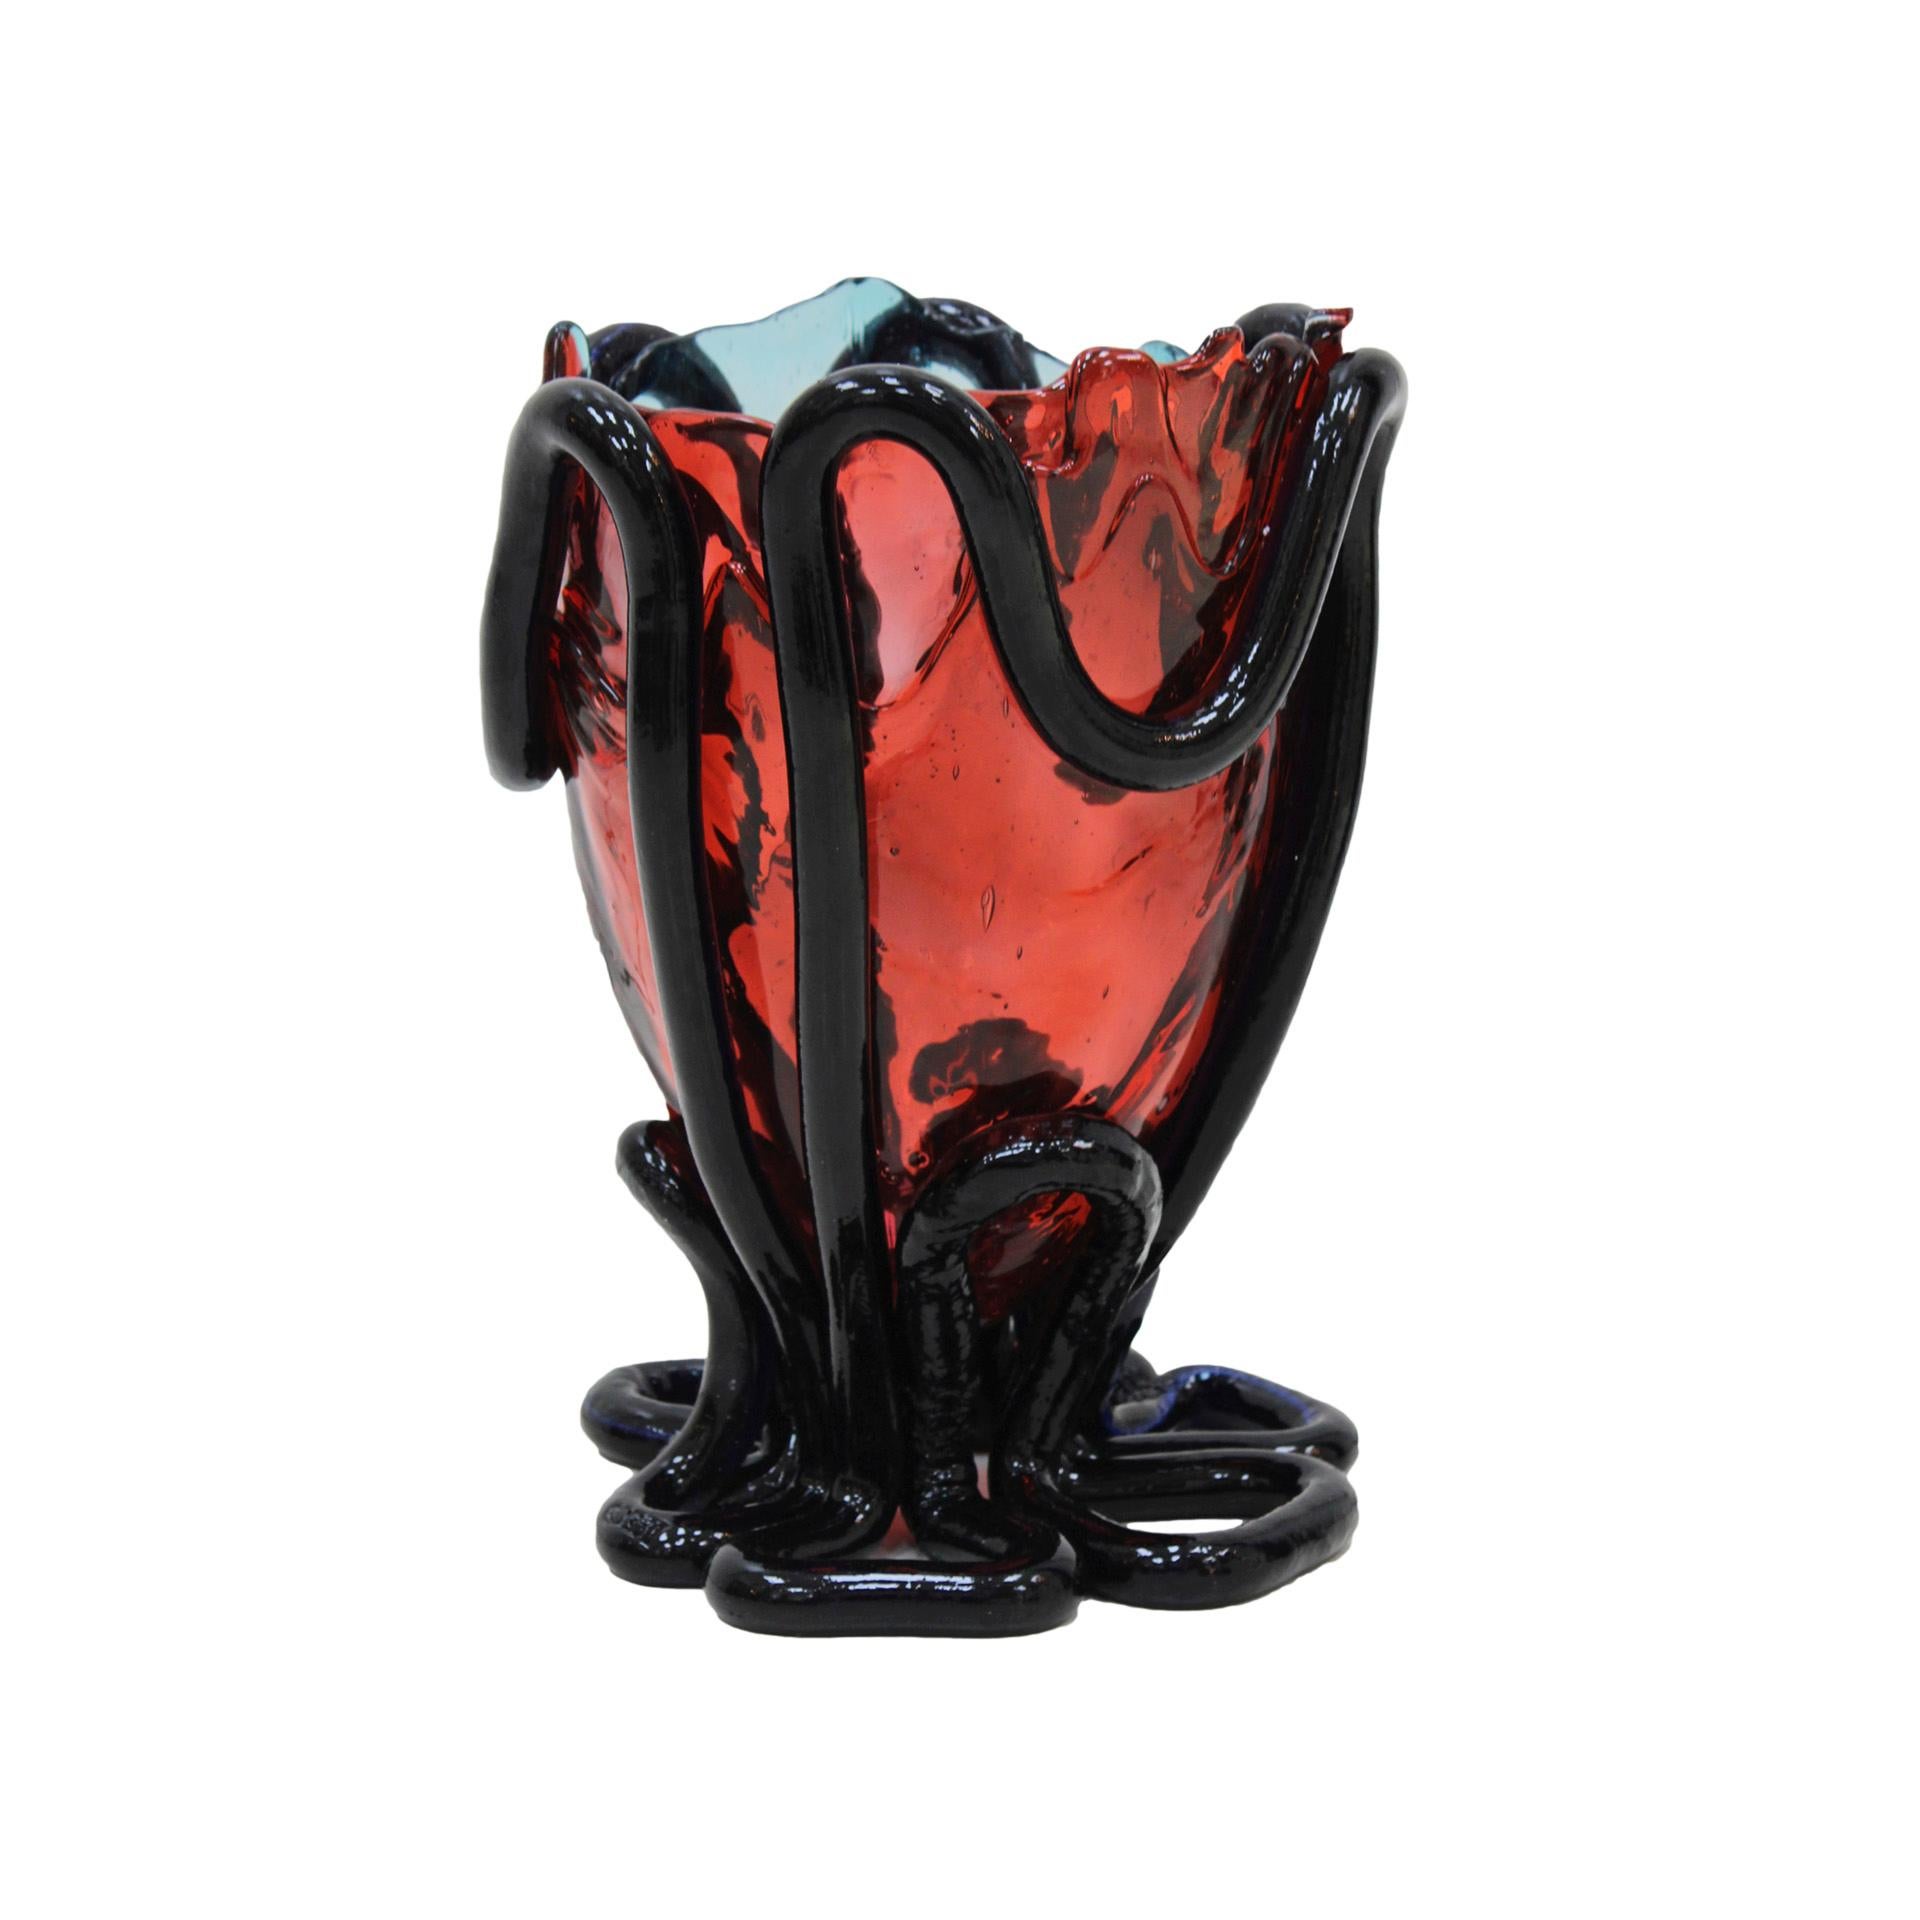 Post-Modern Resin Vase Mod. Indian Summer, Designed by Gaetano Pesce, Italy, 2022